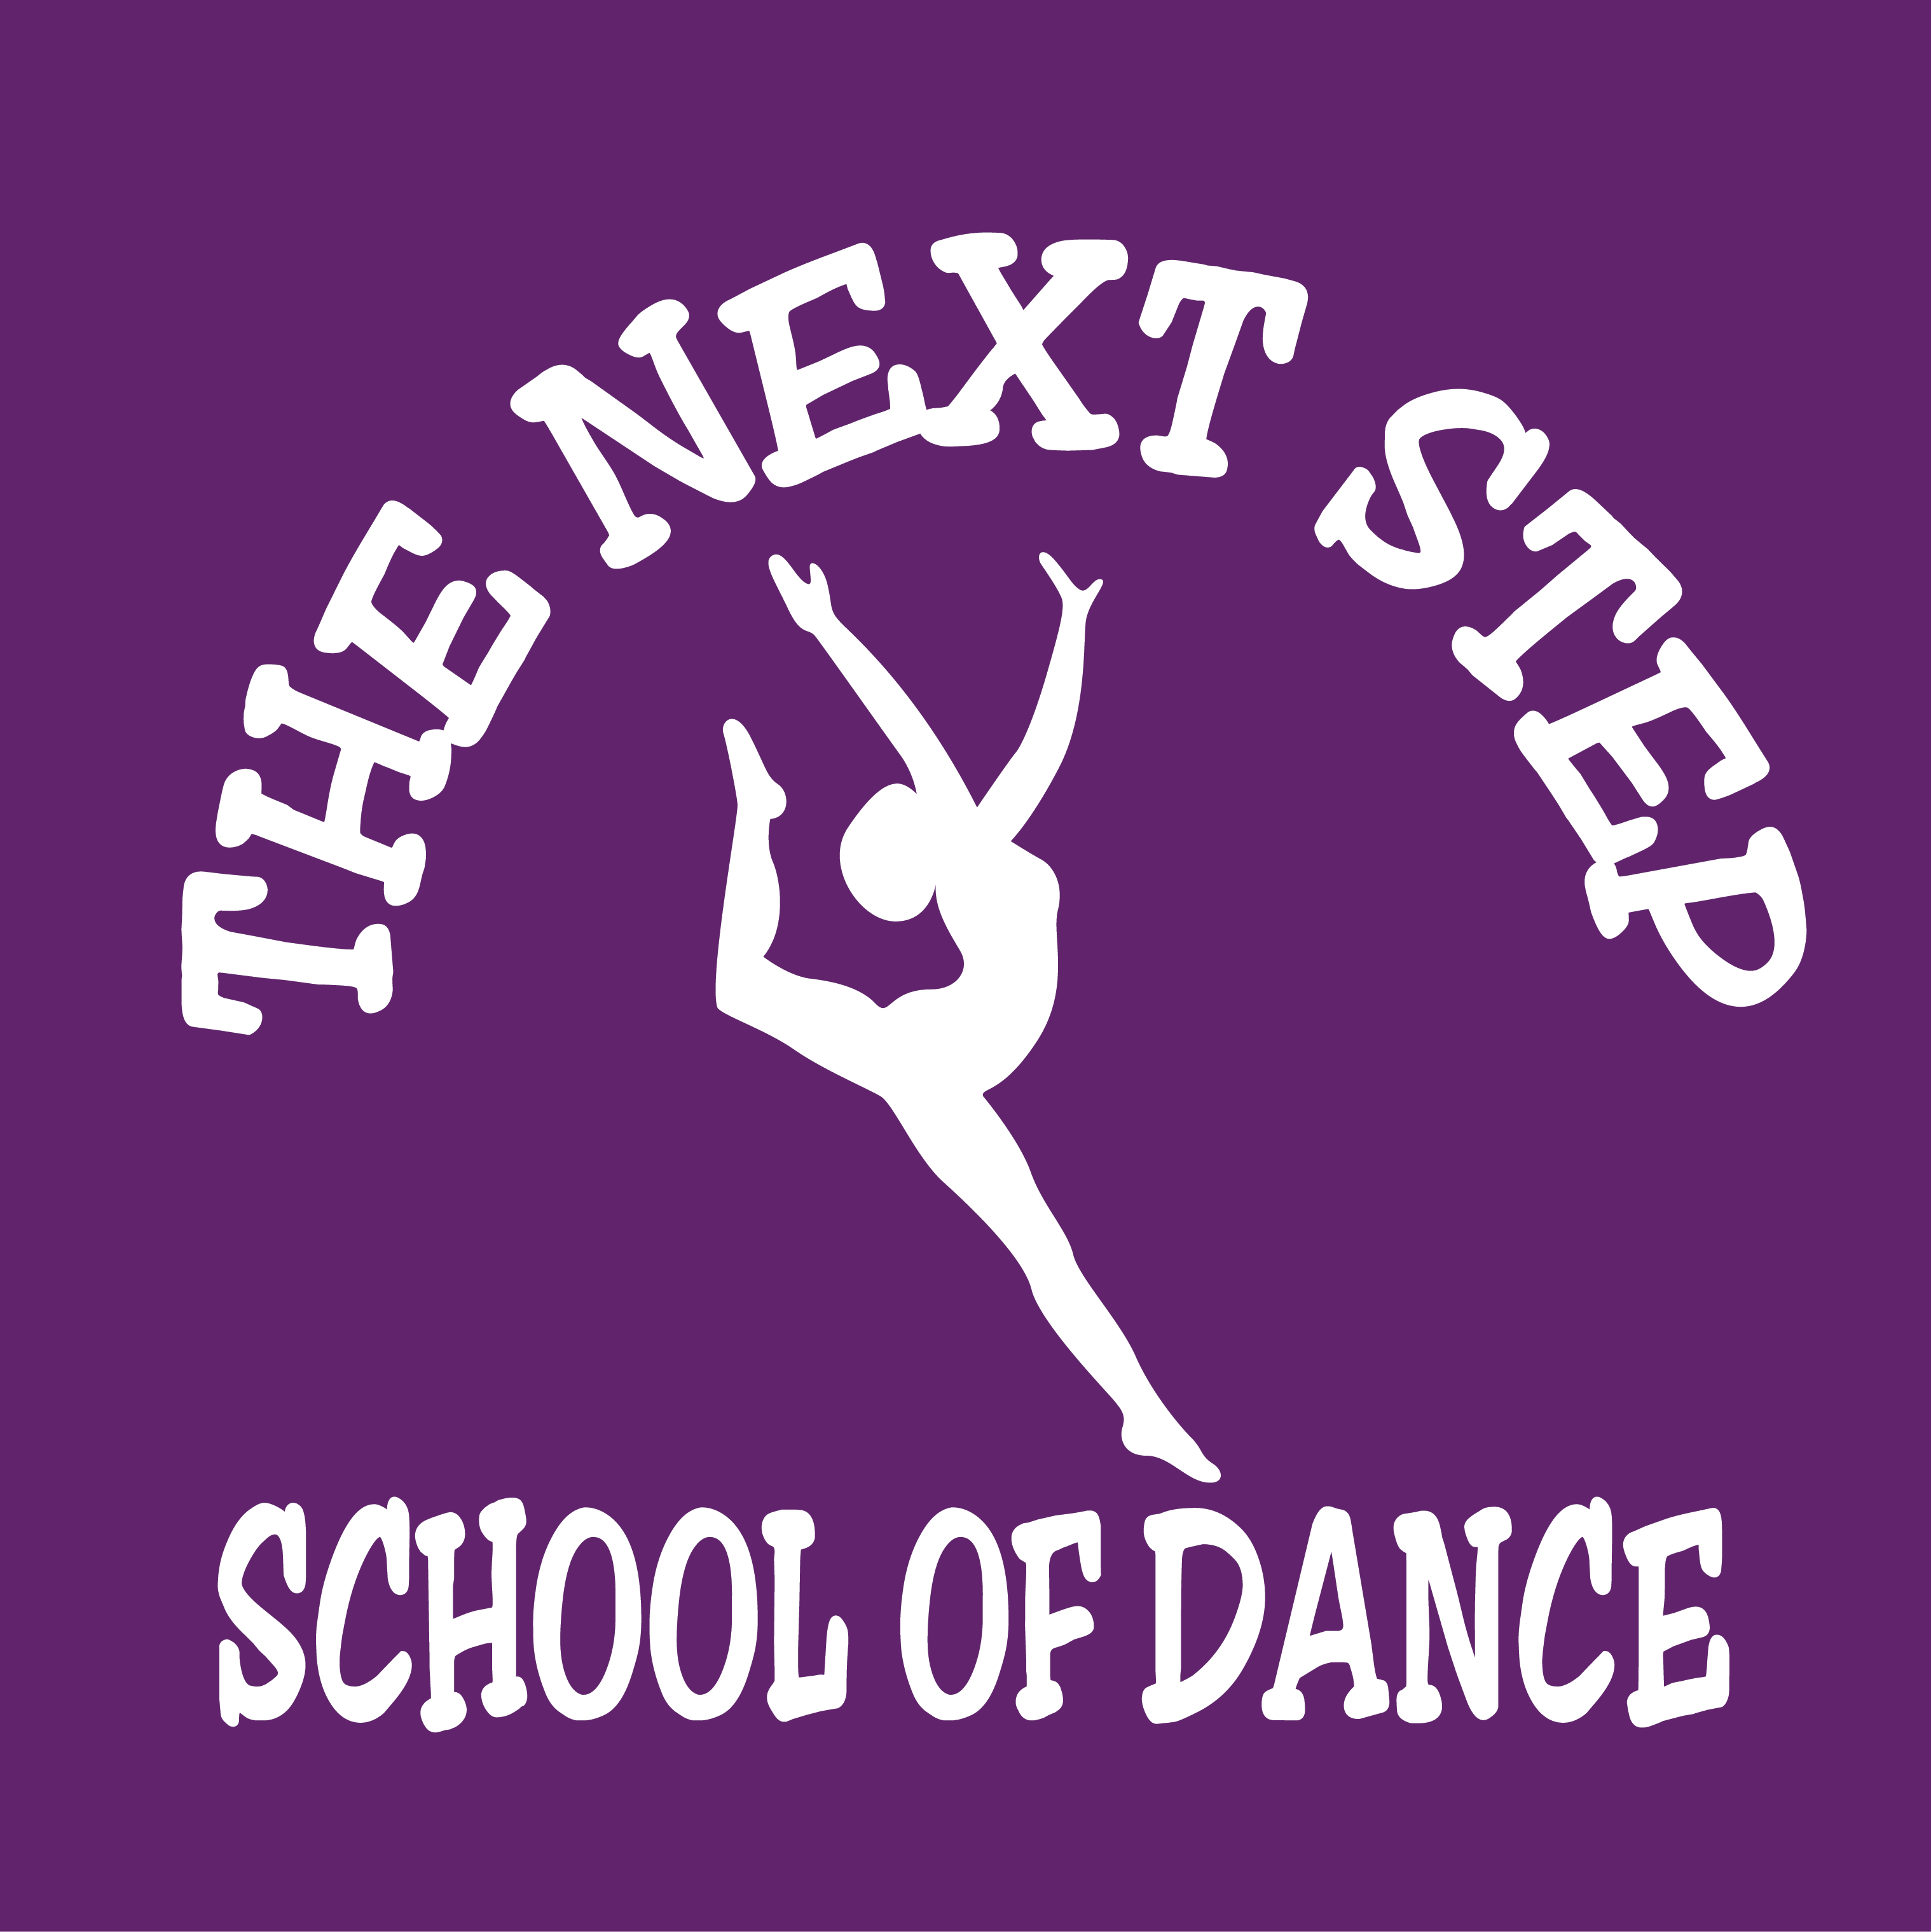 The Next Step School of Dance